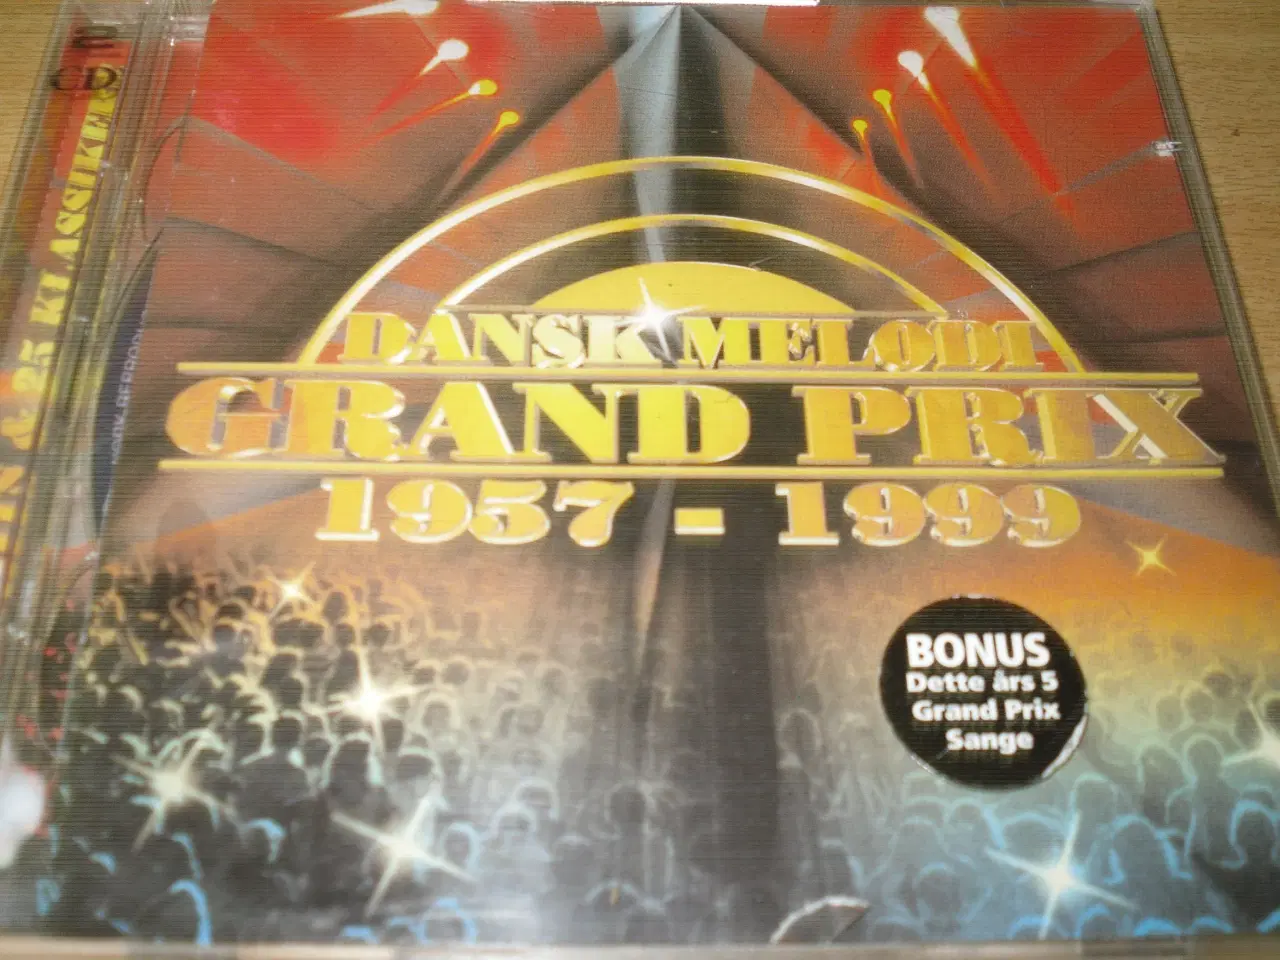 Billede 1 - Dansk; Melodi Grand Prix; 1957 - 1999.